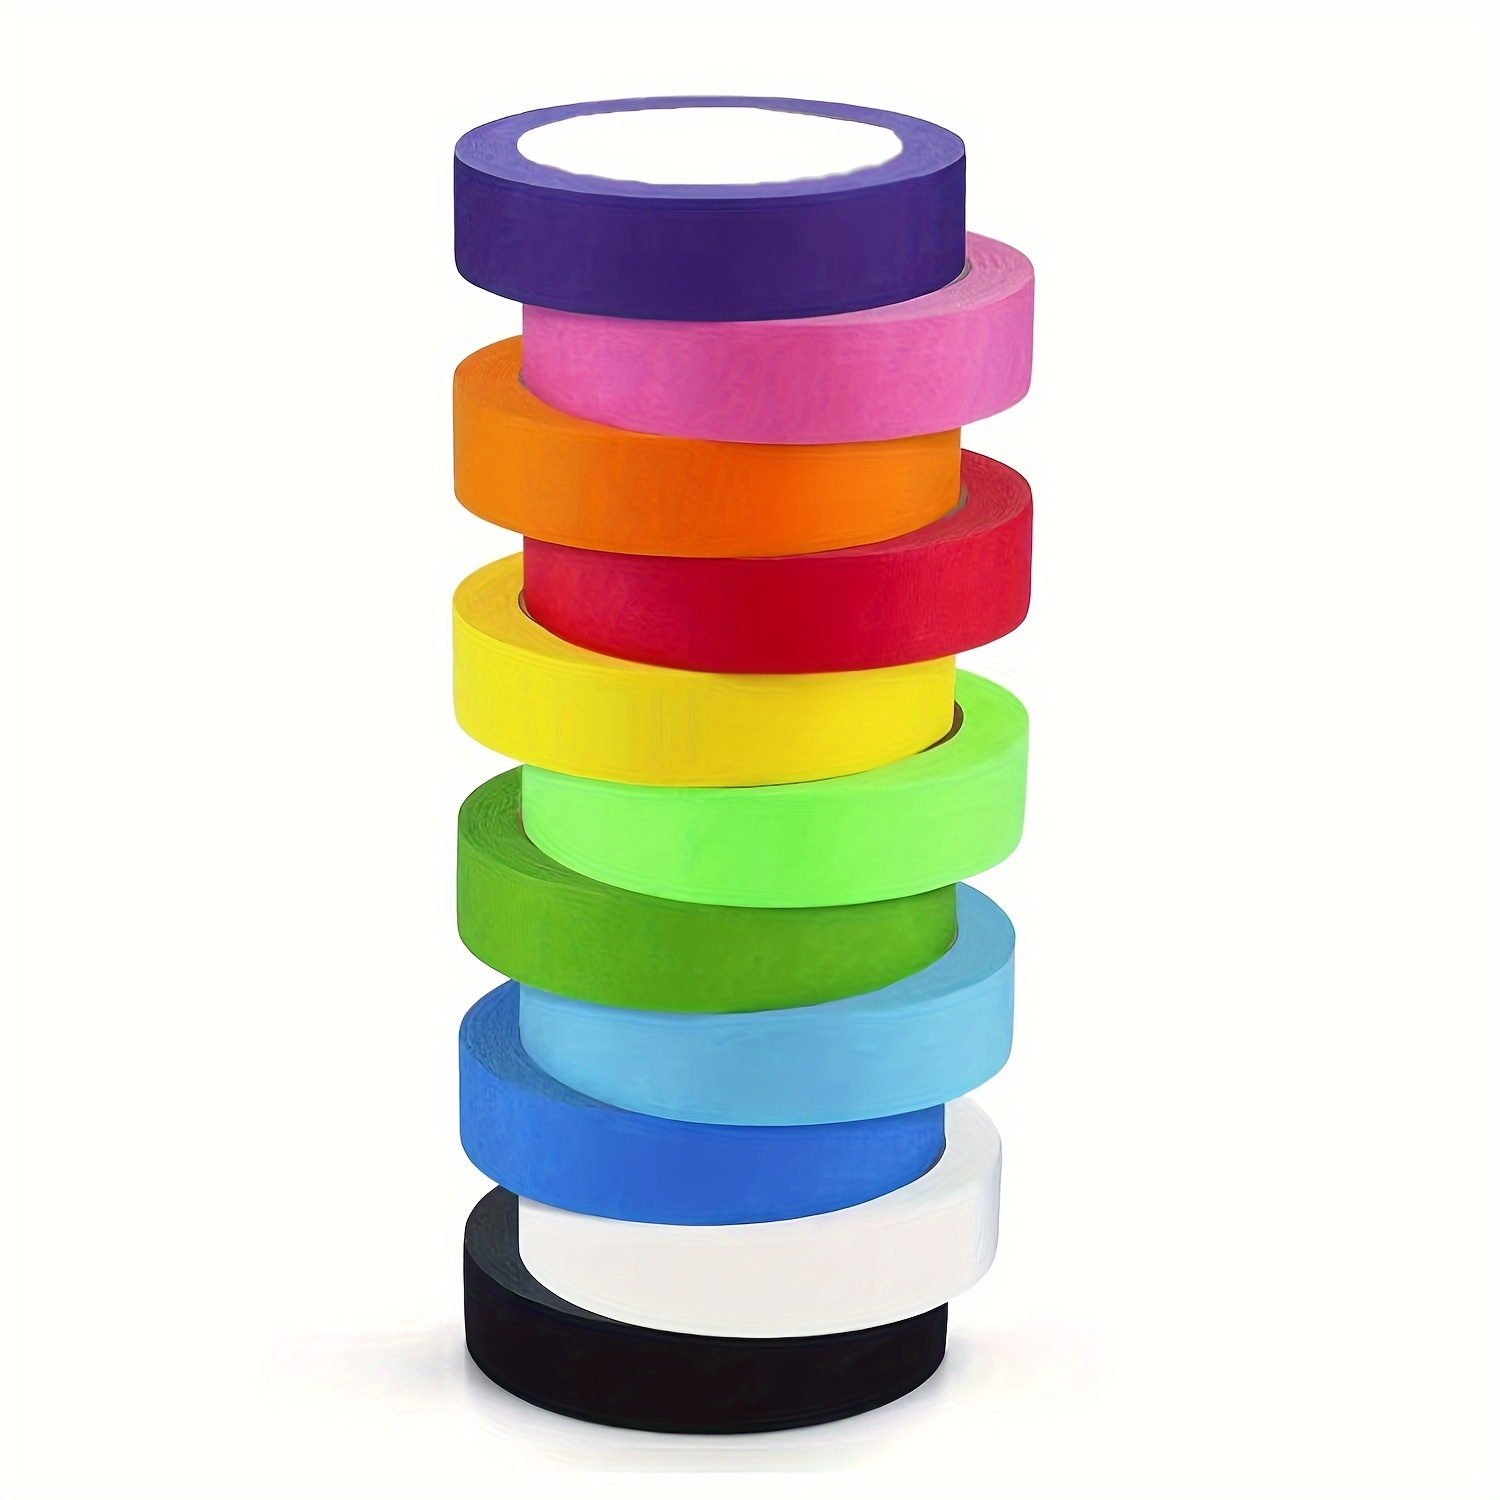 6 unidades de cinta adhesiva de colores arco iris, cinta de etiquetado,  rollo de cinta de arte gráfico para diversión kit de suministros de arte, 2